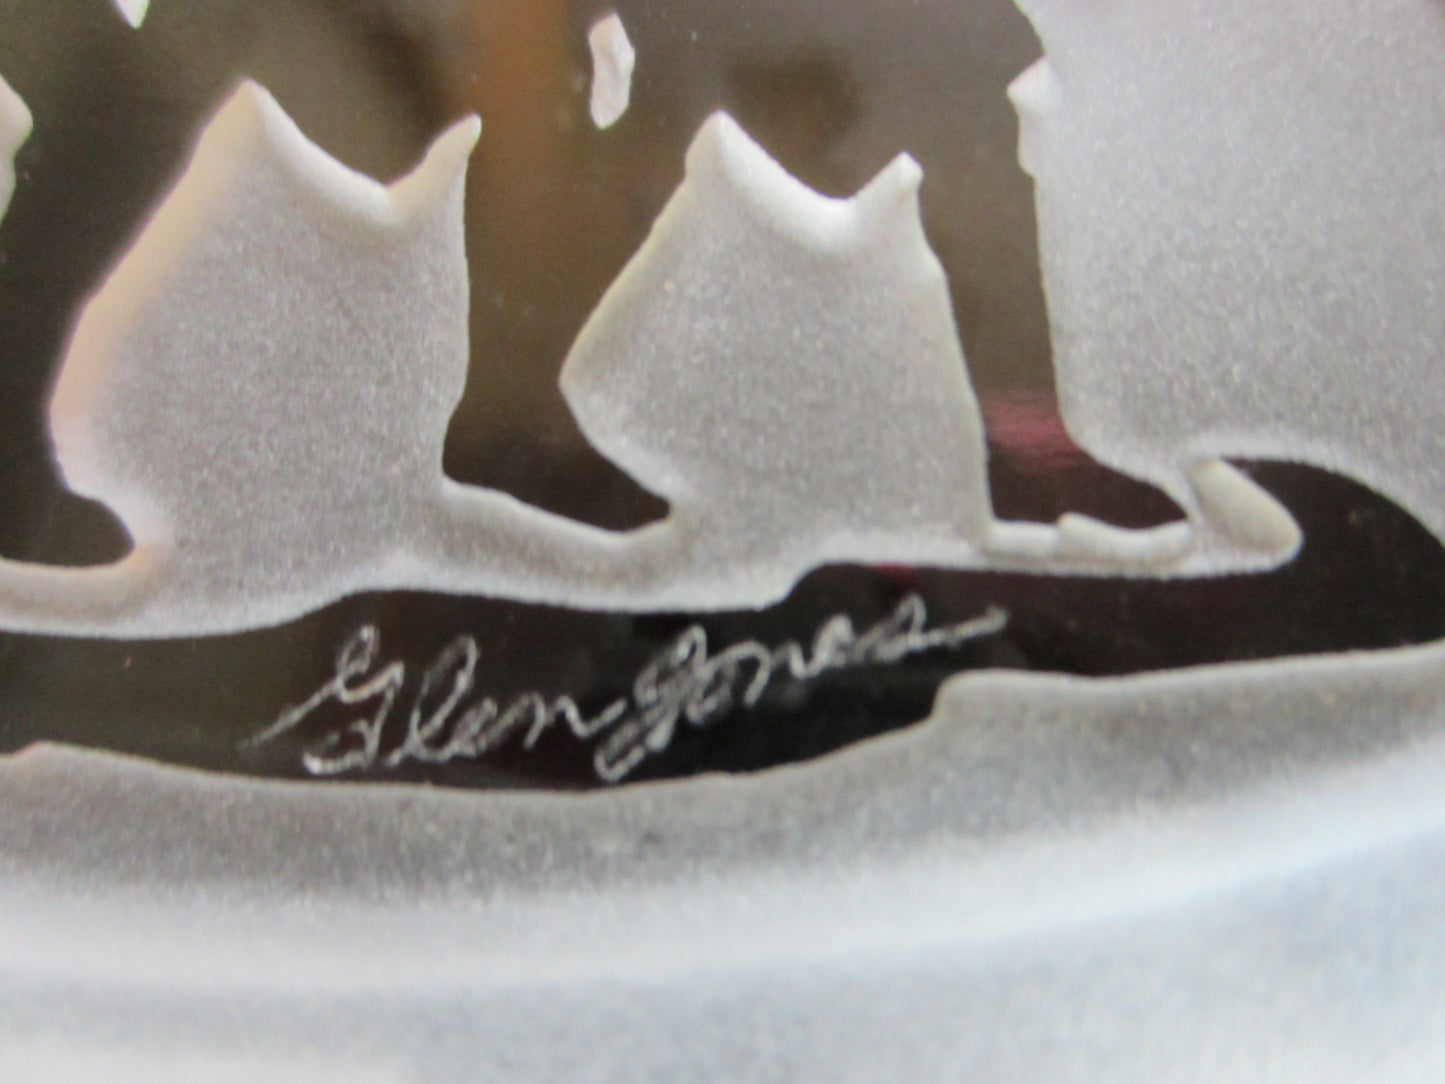 Glen Jones Commemorative Bicentennial Glass Paperweight Limited Edition - Designer Unique Finds 